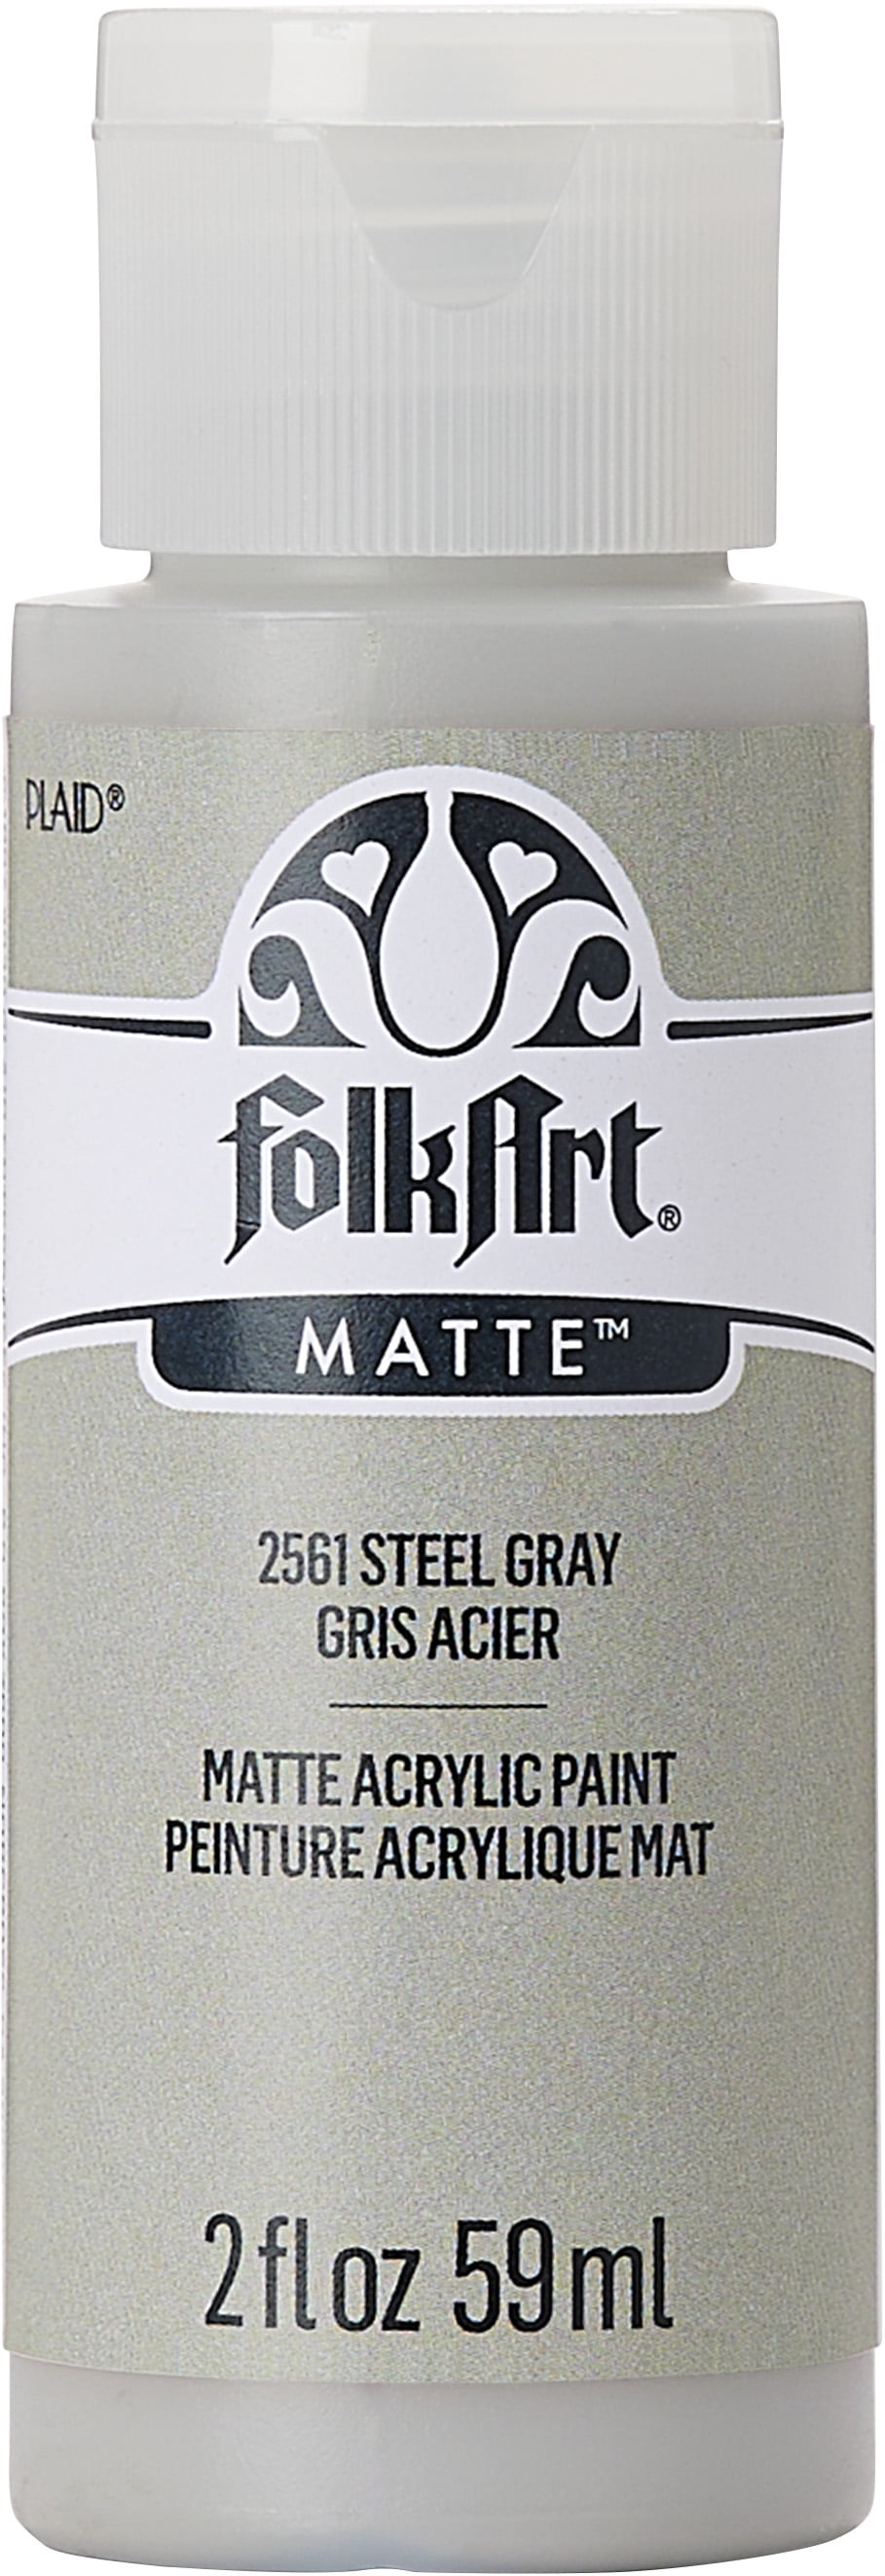 Gunmetal Gray Folk Art Acrylic Paints - 667 - Gunmetal Gray Paint, Gunmetal  Gray Color, Plaid Folk Art Paint, 949599 